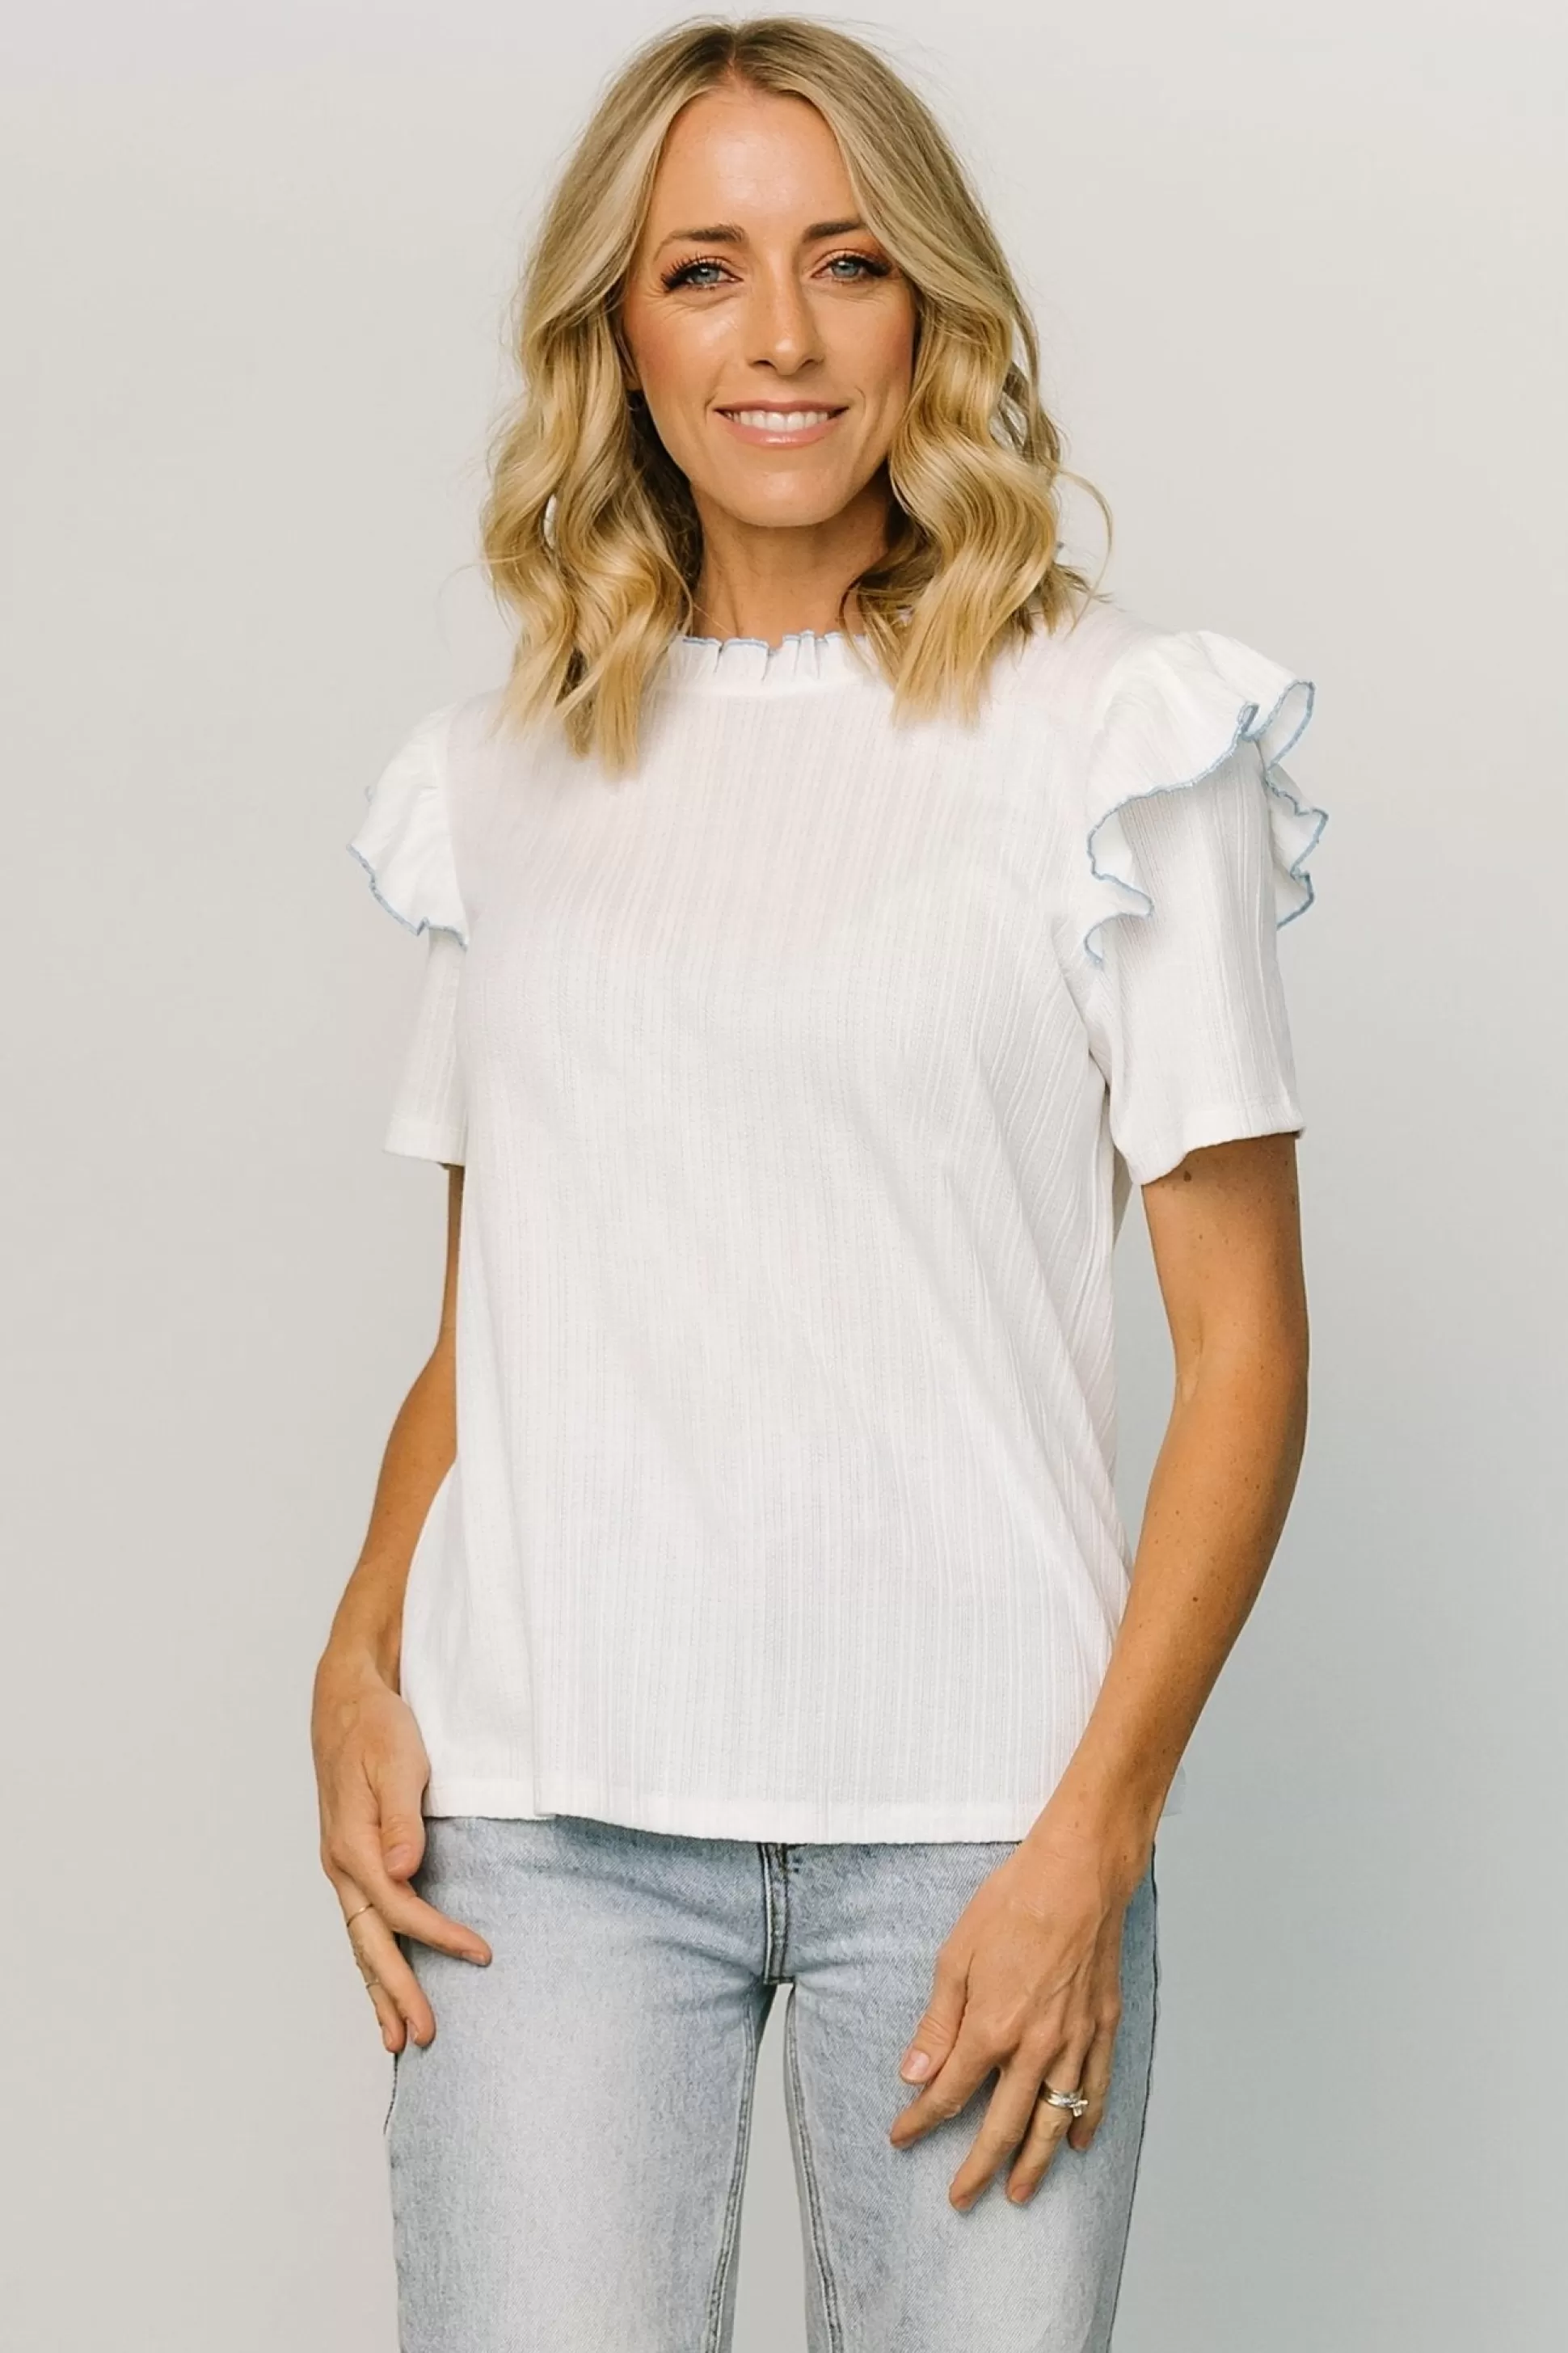 blouses + shirts | Baltic Born Atlas Ruffle Sleeve Top | Off White + Blue